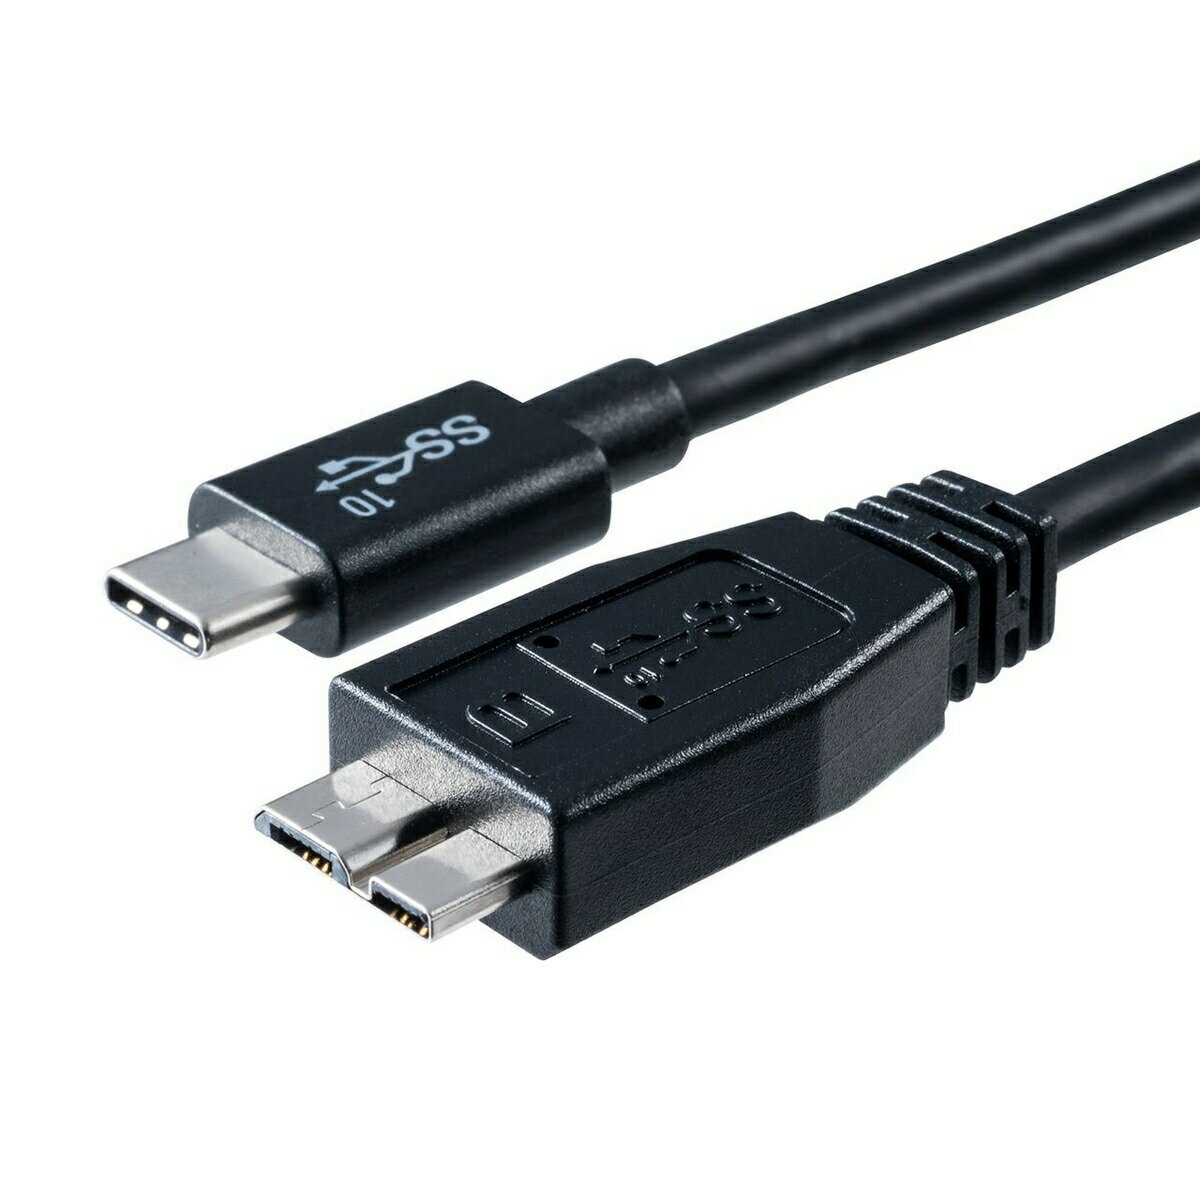 USB タイプCケーブル 50cm USB3.1 Gen2 Type-Cオス/USB3.0 microB USB-IF認証済み ブラック USBケーブル TypeC オス